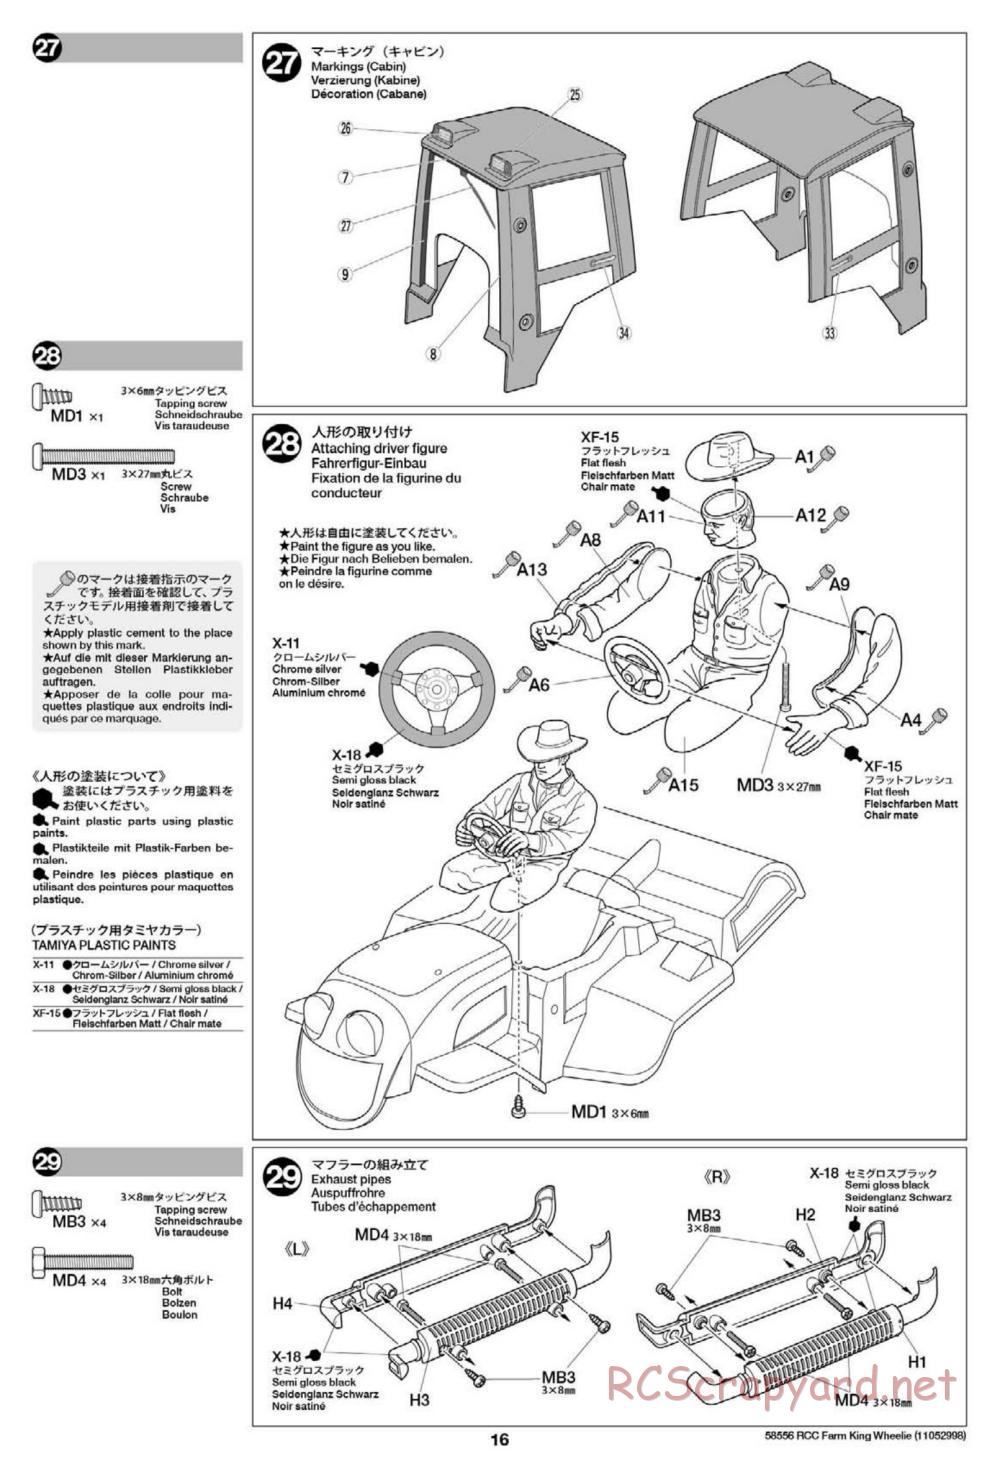 Tamiya - Farm King Wheelie Chassis - Manual - Page 16